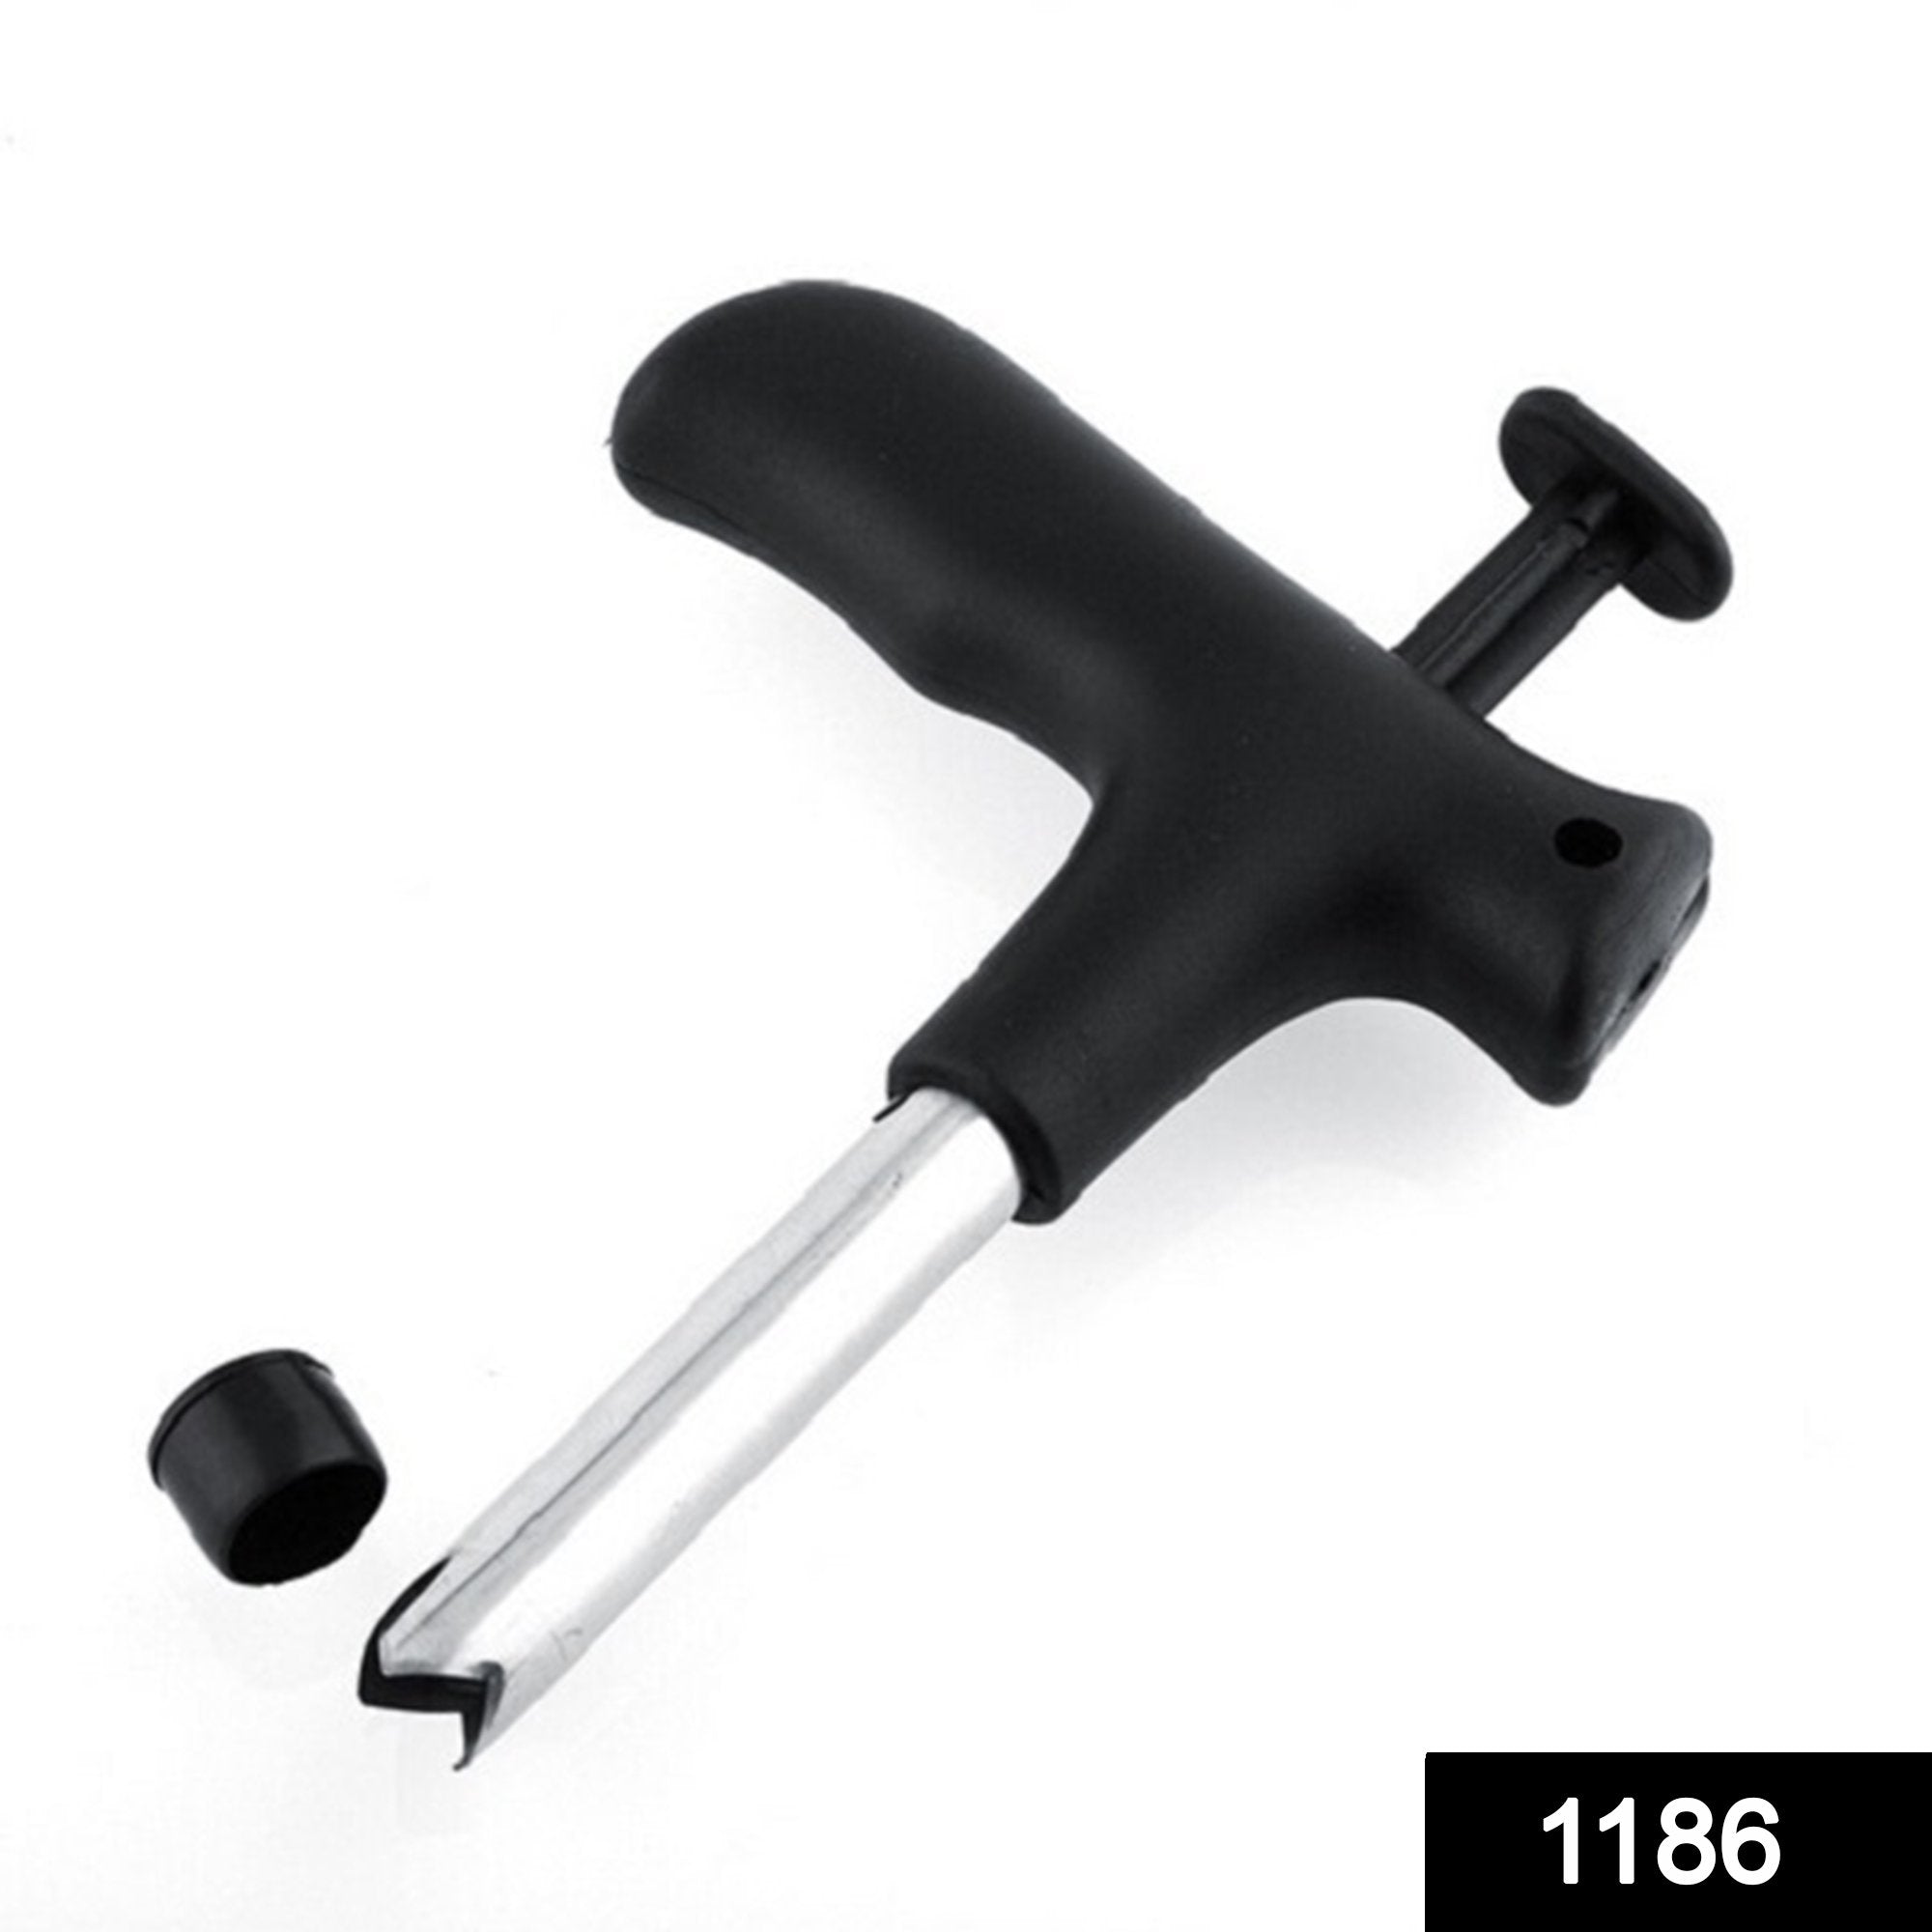 1186 Premium Coconut Opener Tool/Driller with Comfortable Grip - SkyShopy